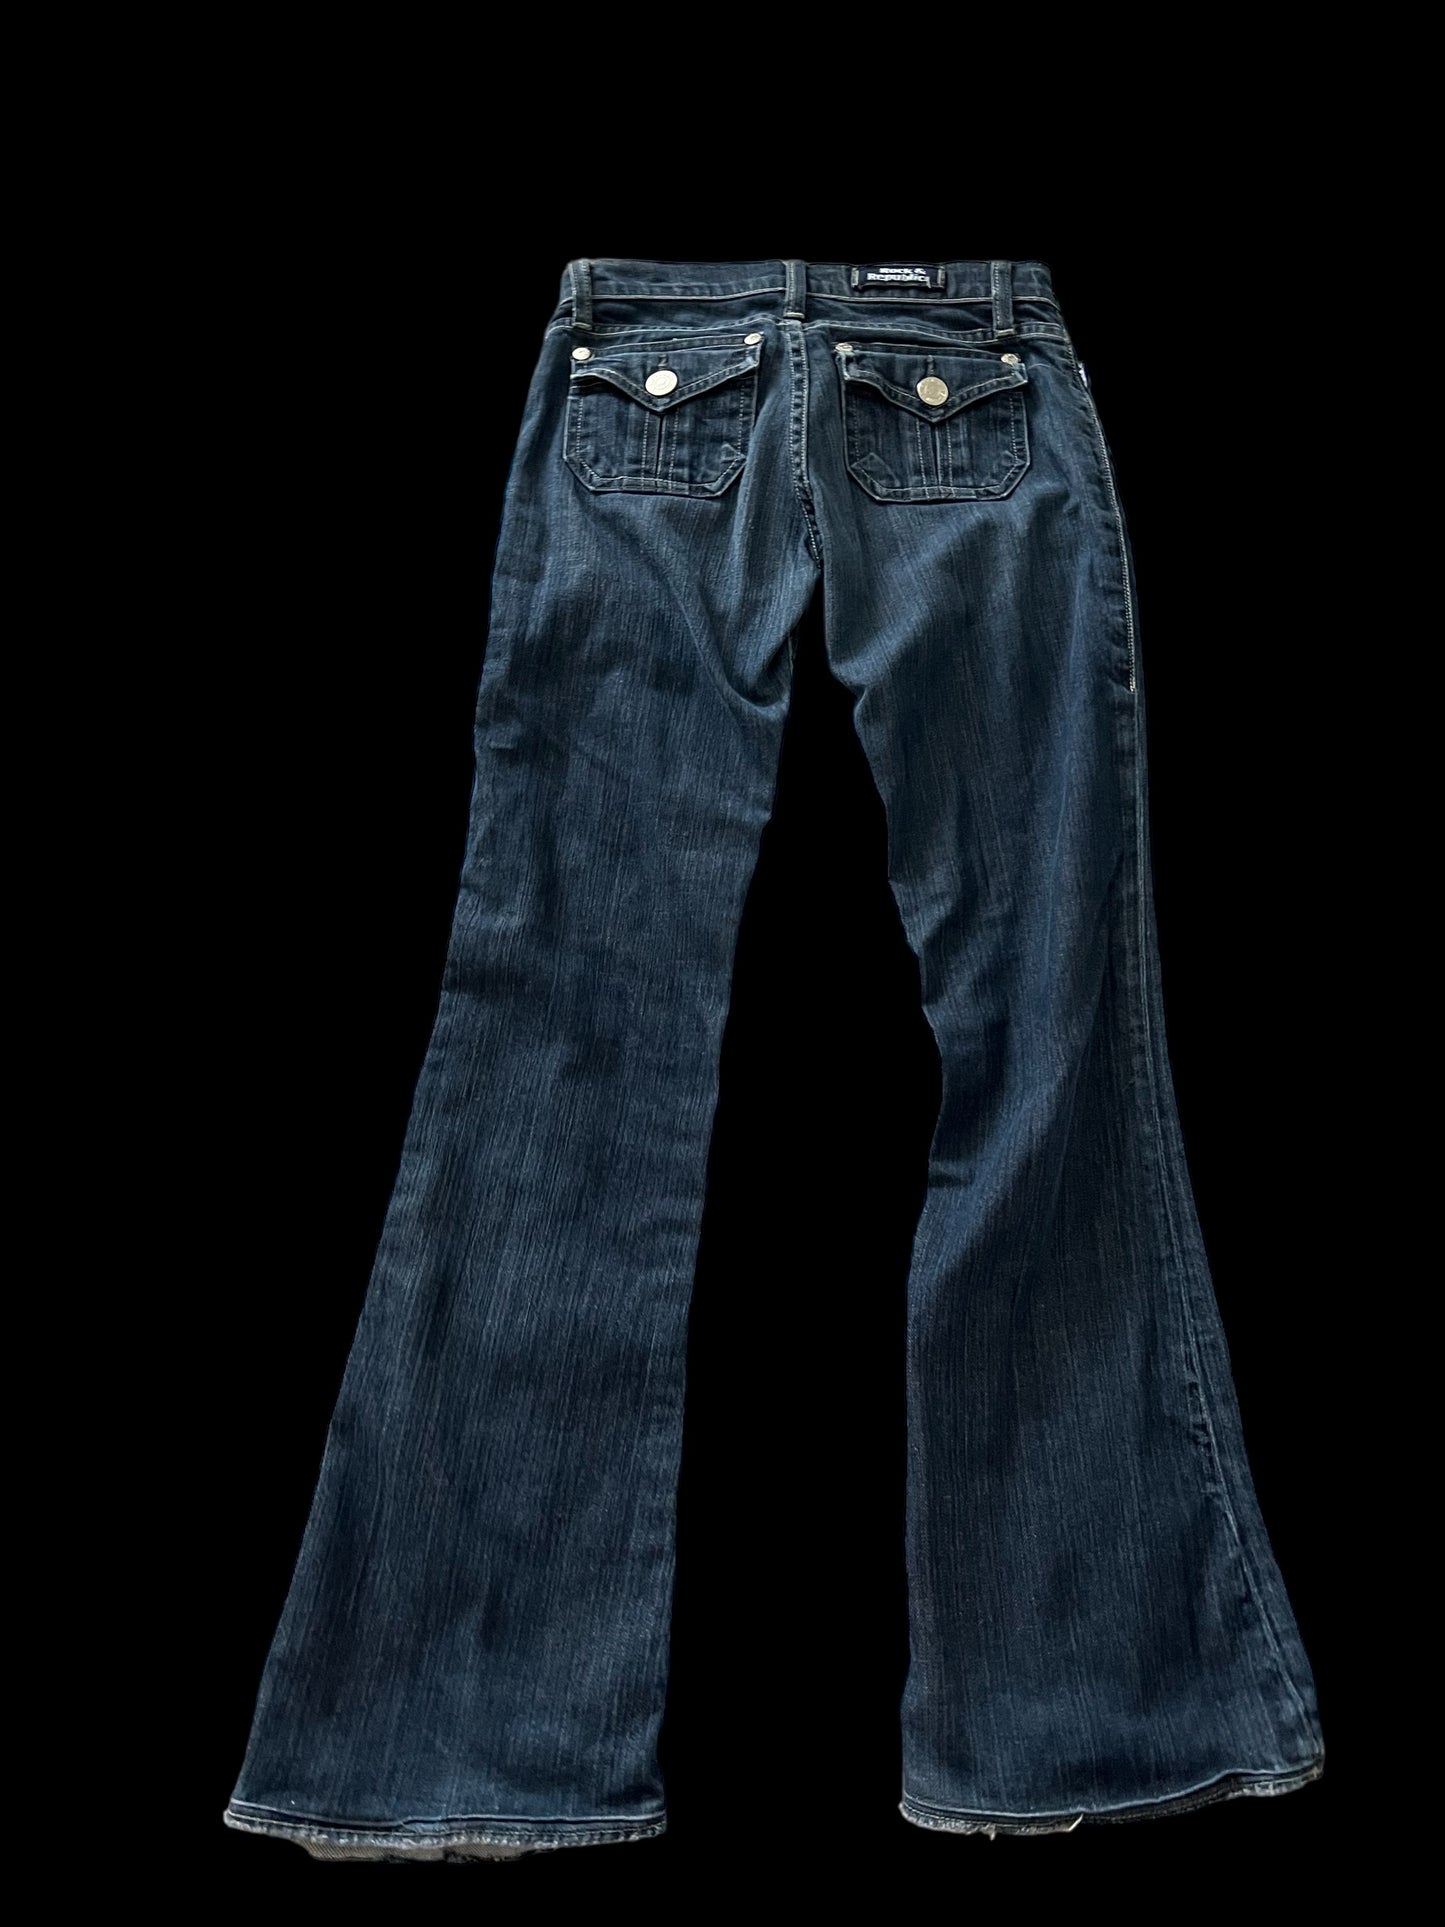 Rock & Republic Jeans